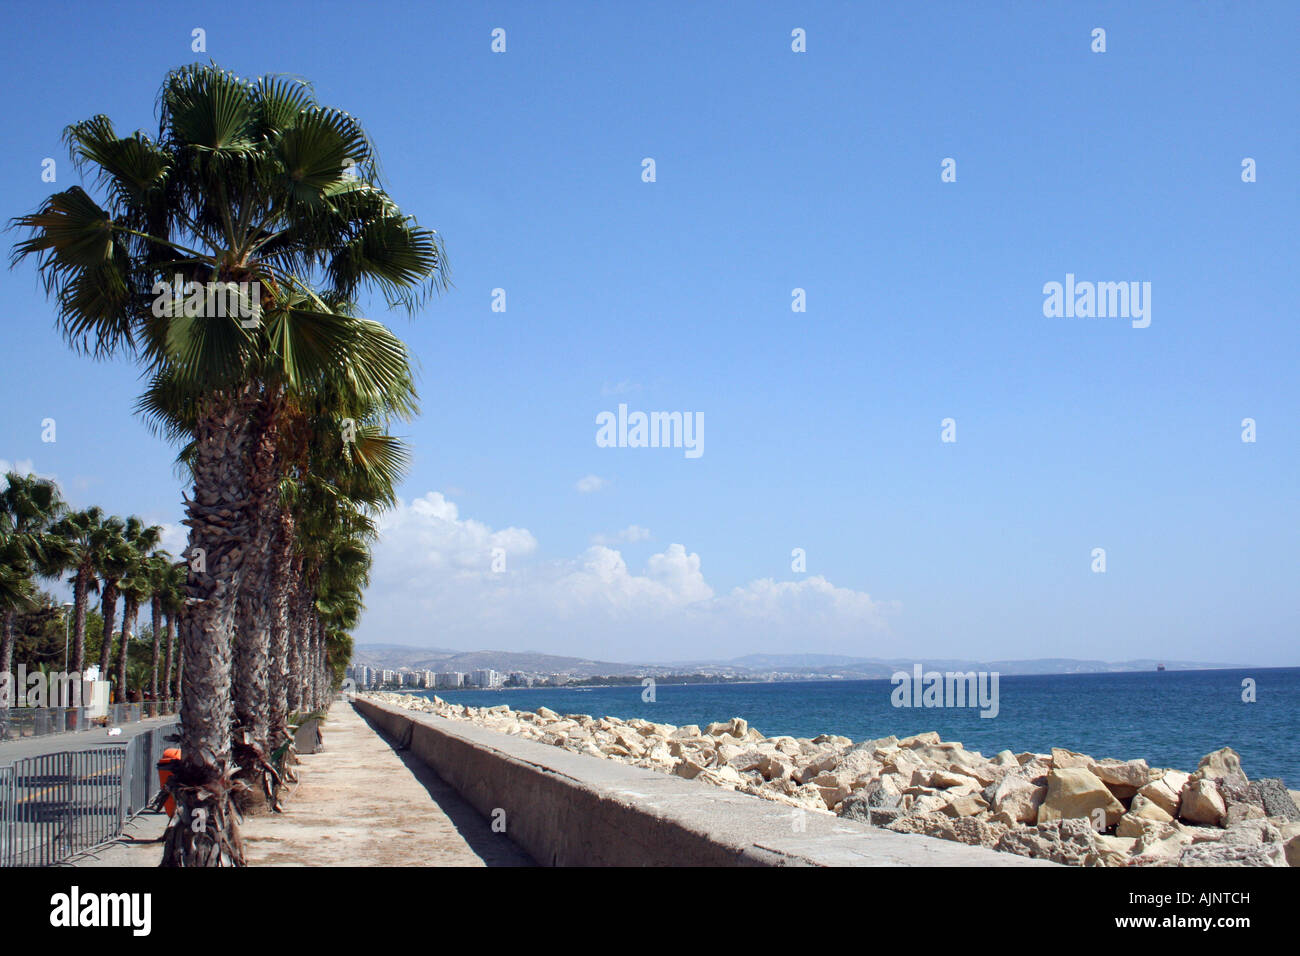 Ayia Napa beach promenade on island of Cyprus Stock Photo